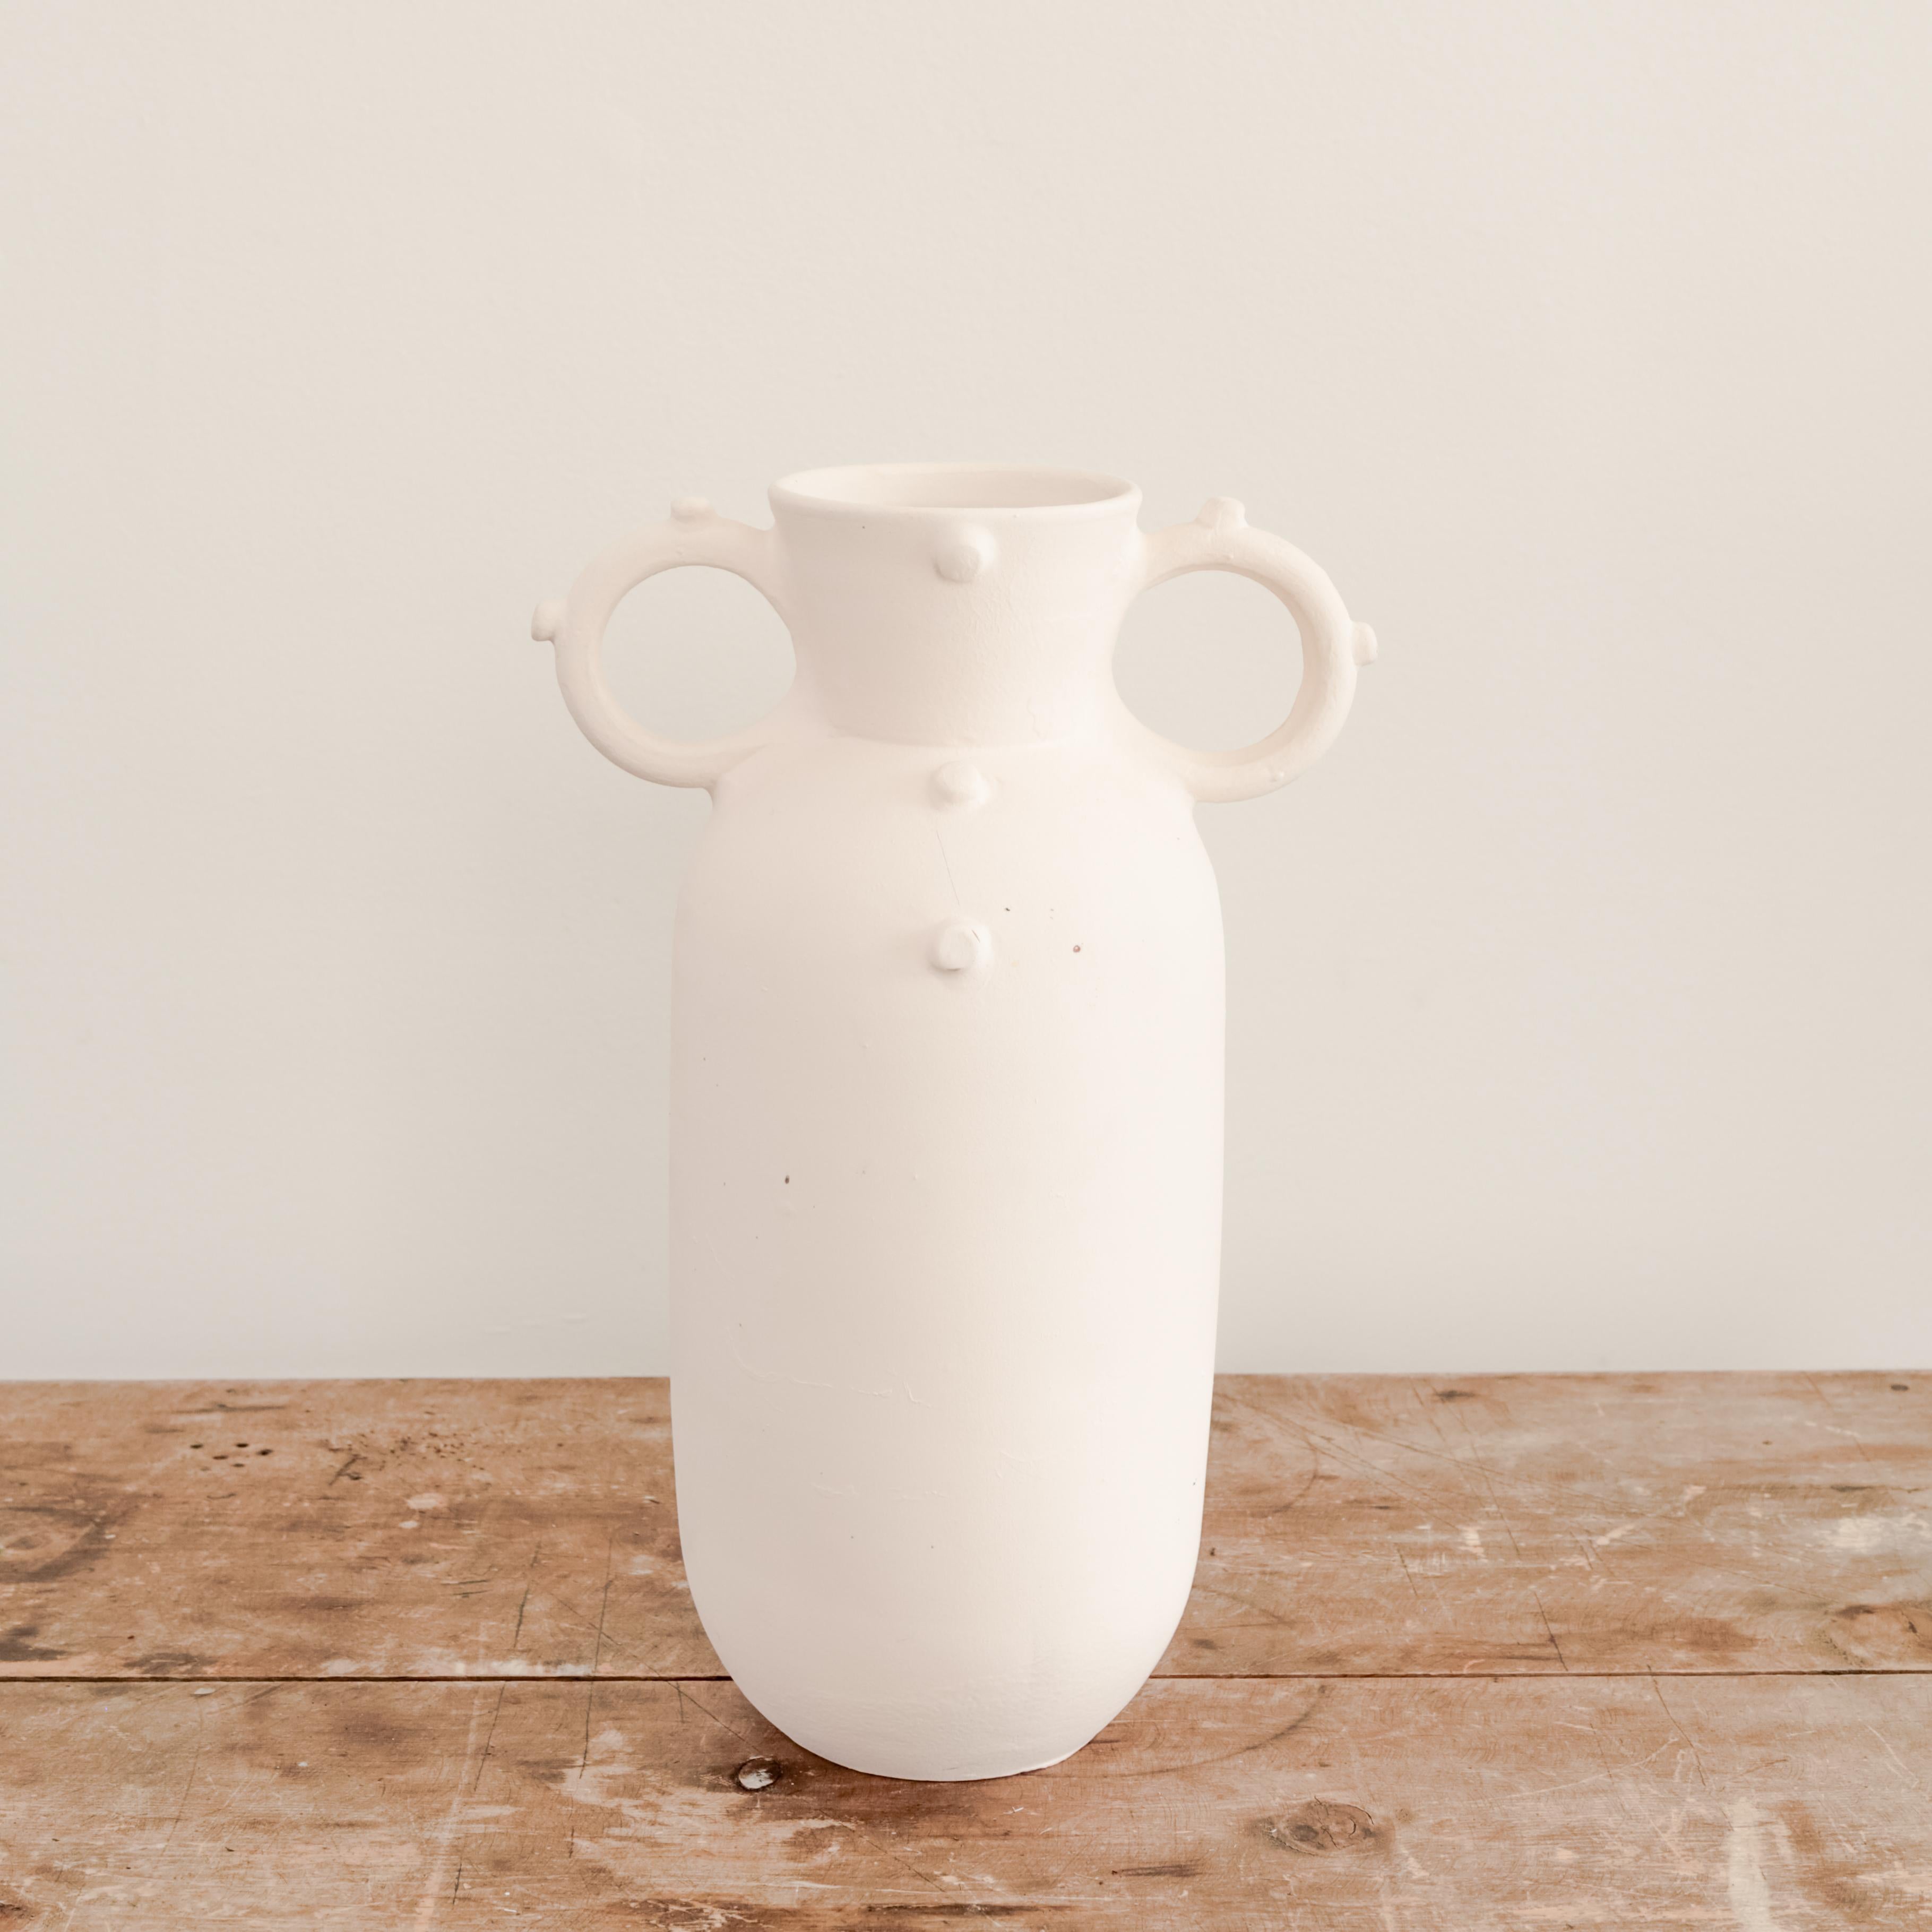 Unglazed white ceramic Miku vase with handles.